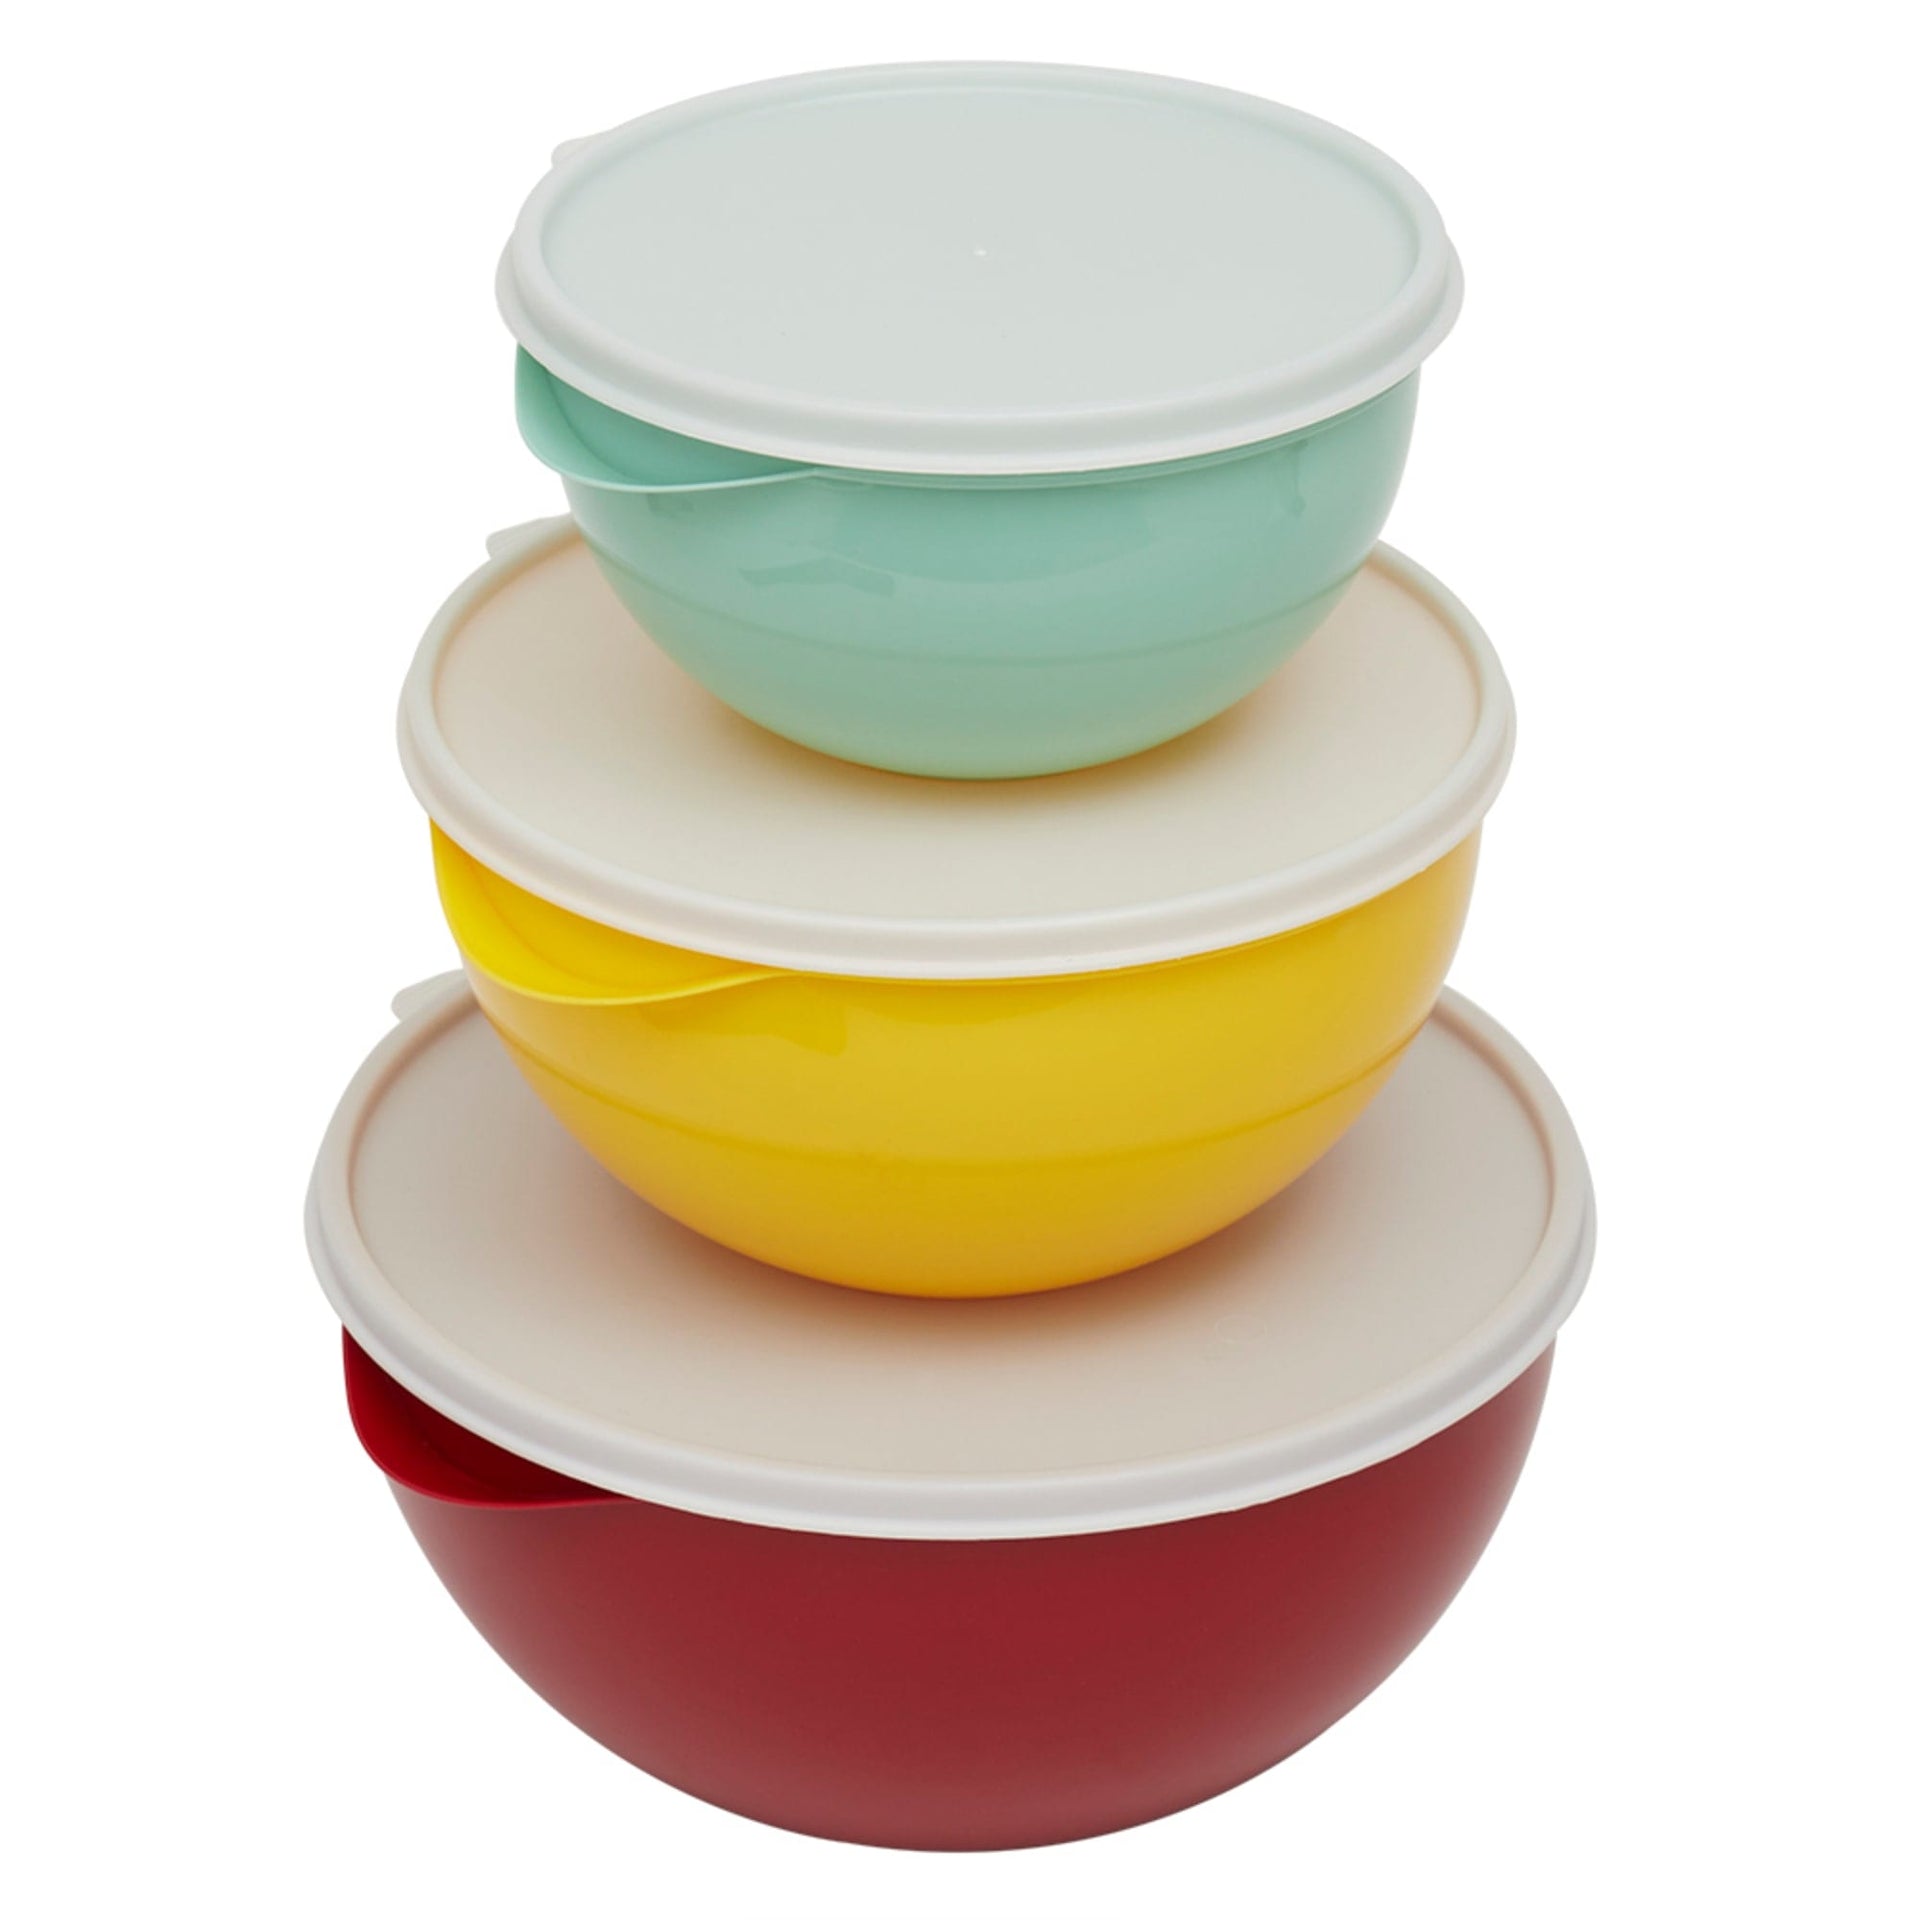 Godinger godinger mixing bowls with lids, plastic nesting bowls set,  storage bowls, microwave safe mixing bowl set, 3 bowls 3 lids